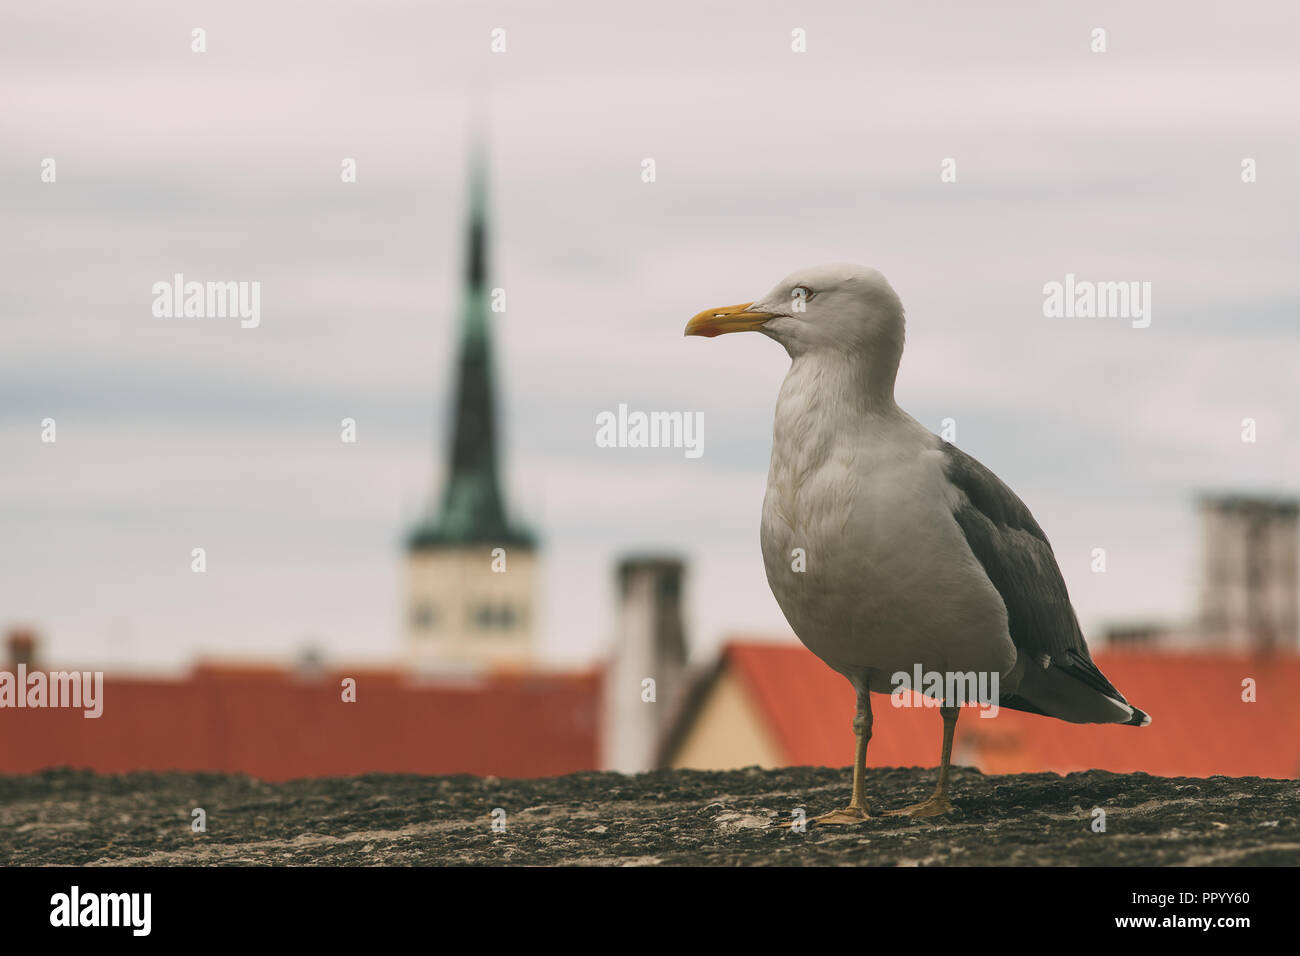 Sea gull against old town of Tallinn city, Estonia Stock Photo